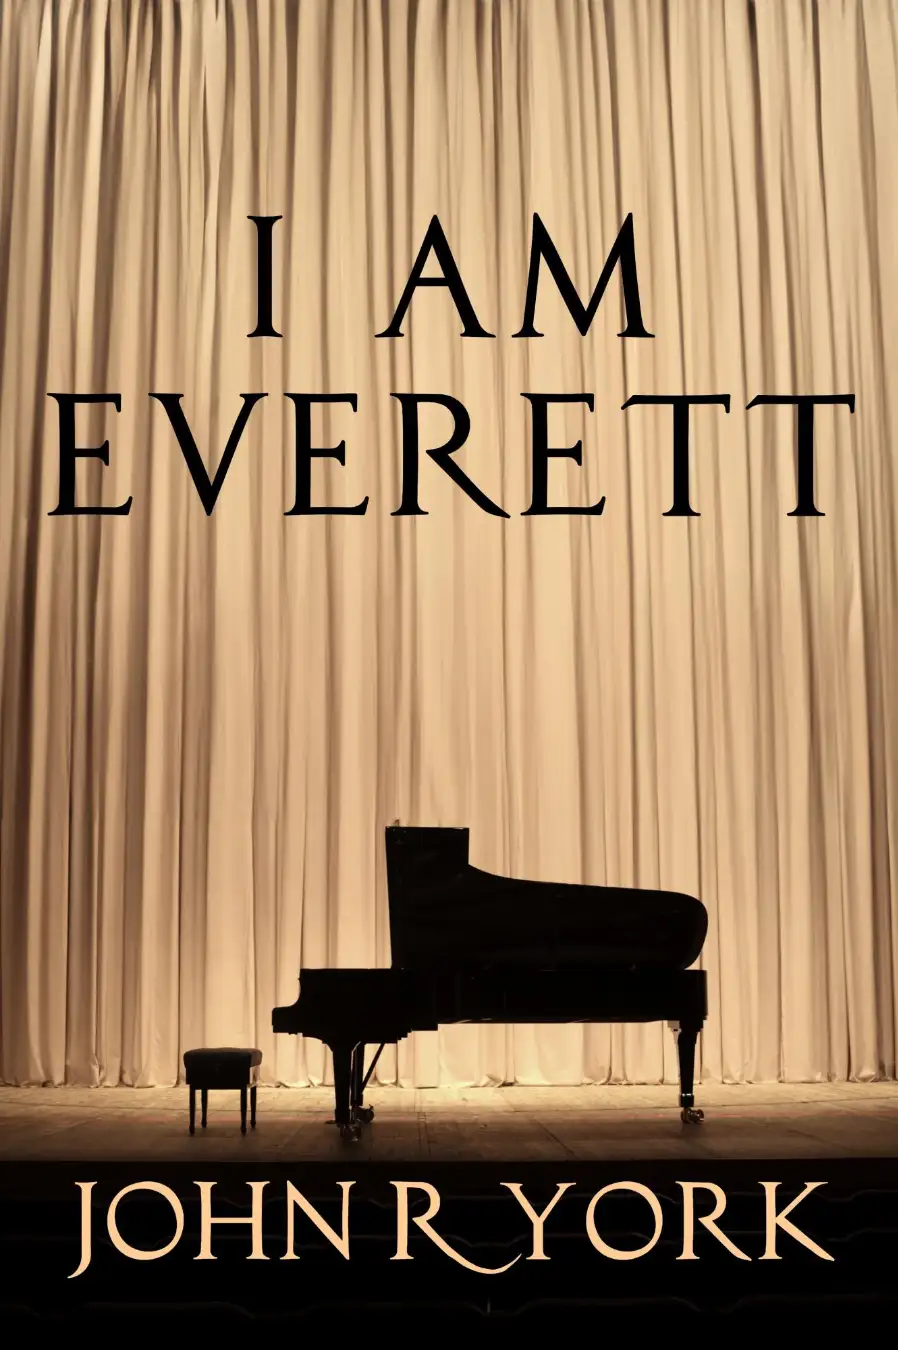 I Am Everett Image